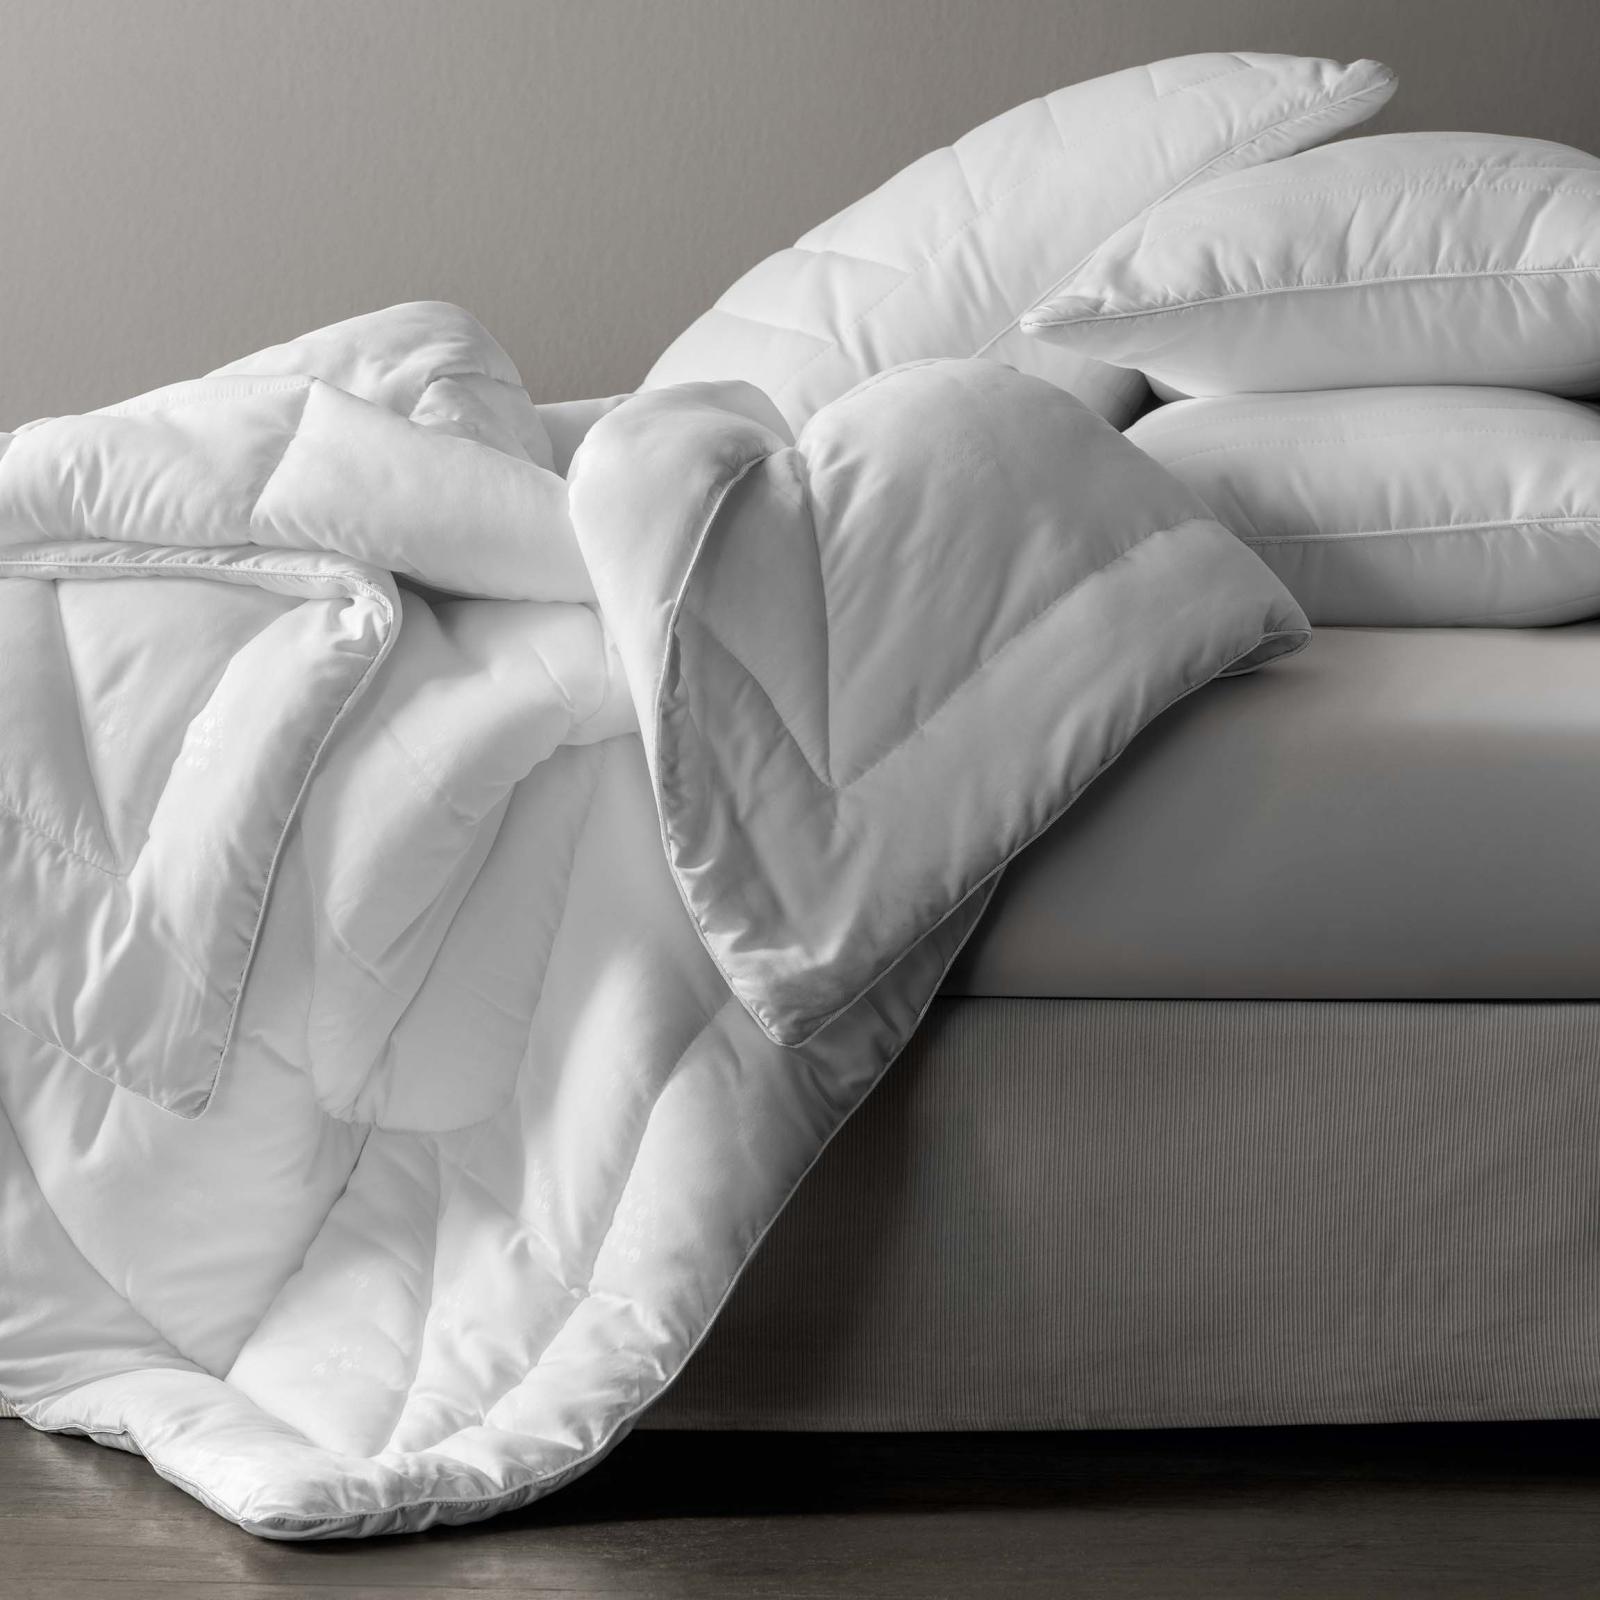 Одеяло Гелиос 200х210 Togas, цвет белый, размер 200х210 см - фото 5